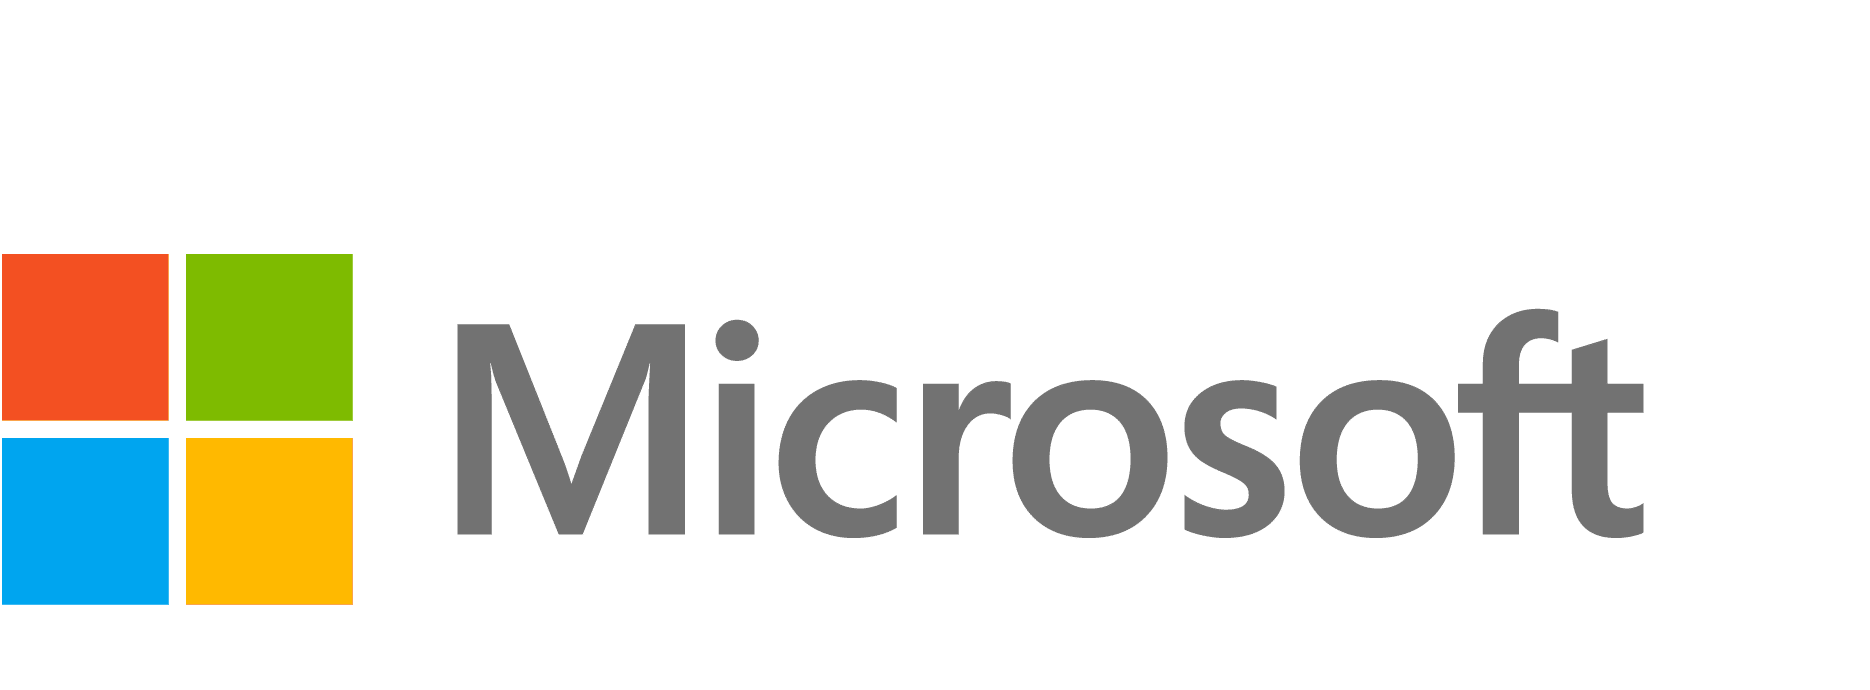 Microsoft logo, strategic alliance for Syxsense